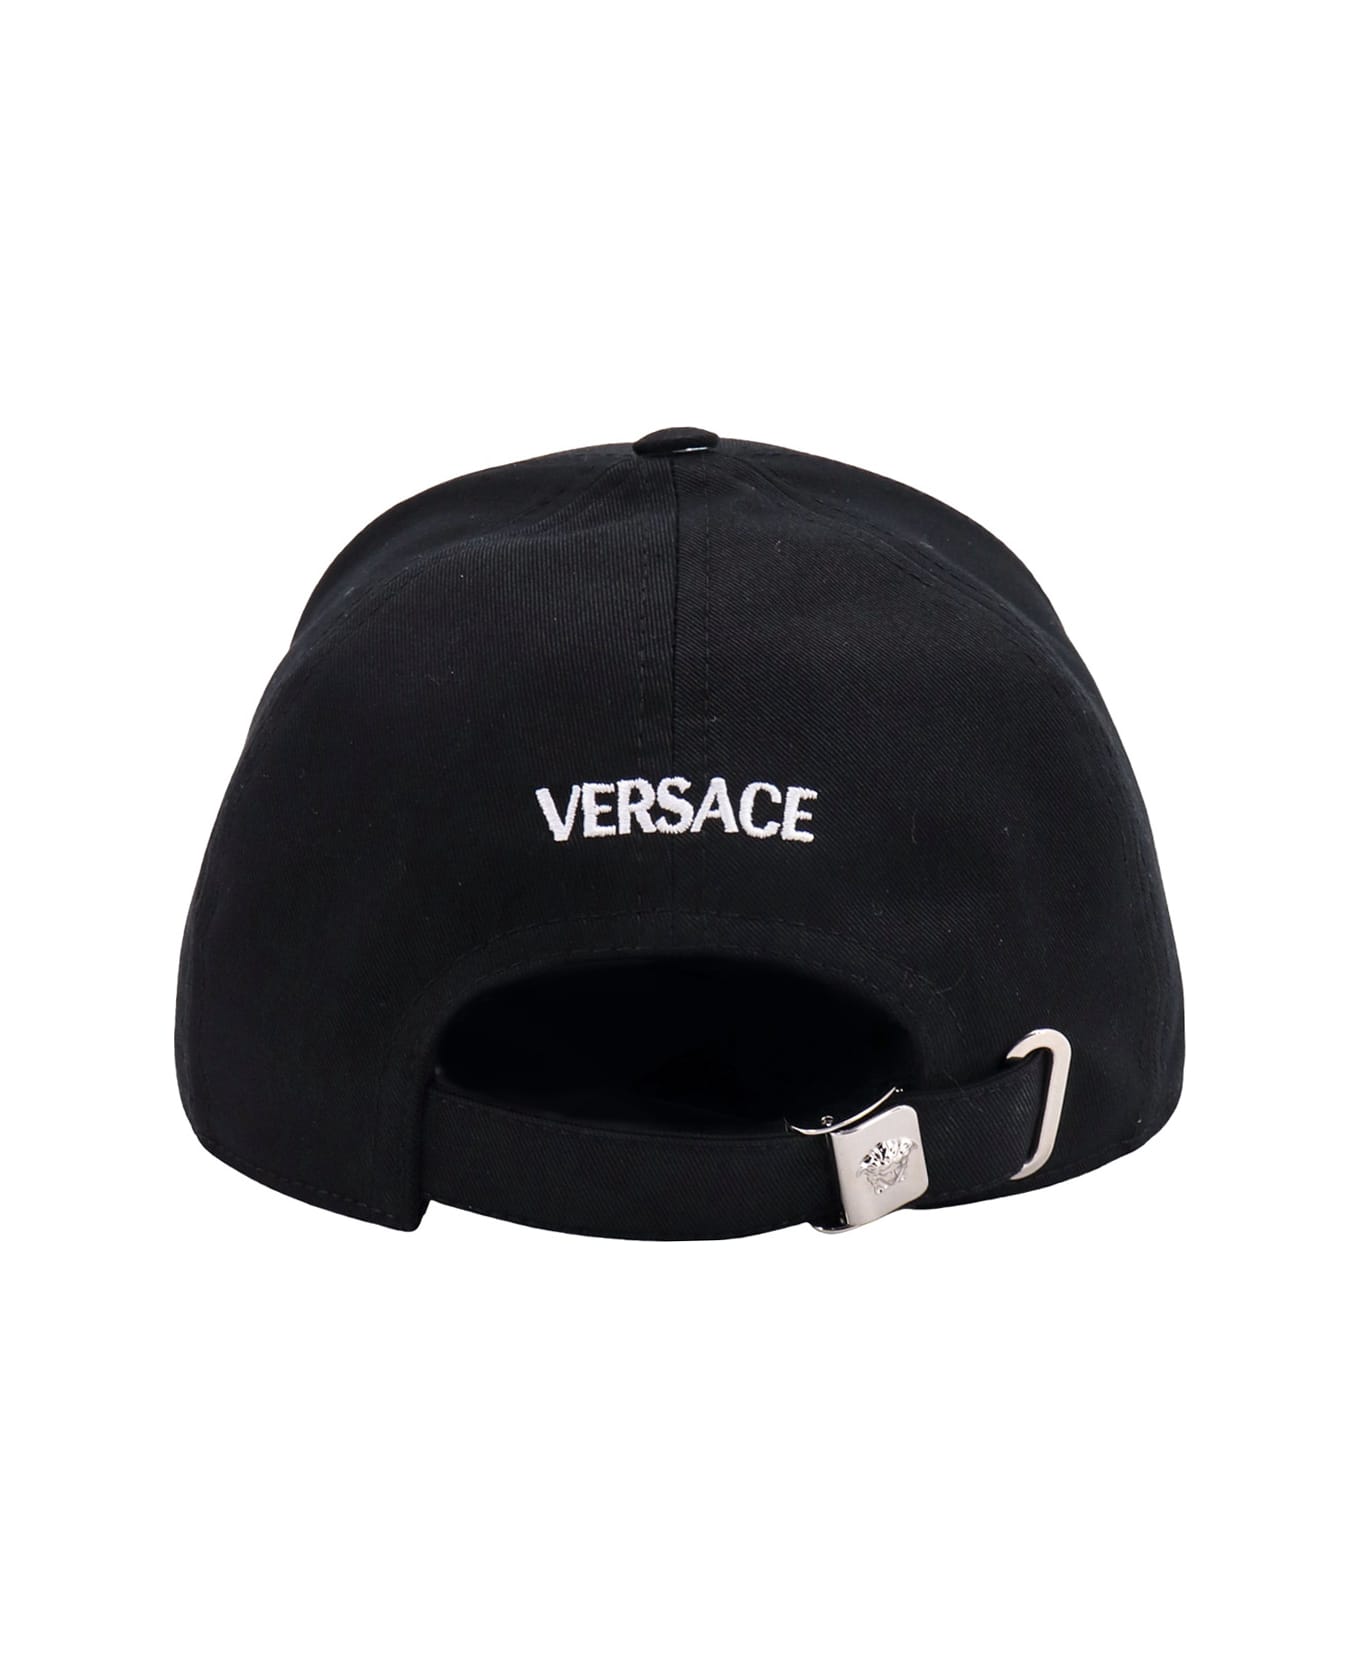 Versace Hat - Black 帽子